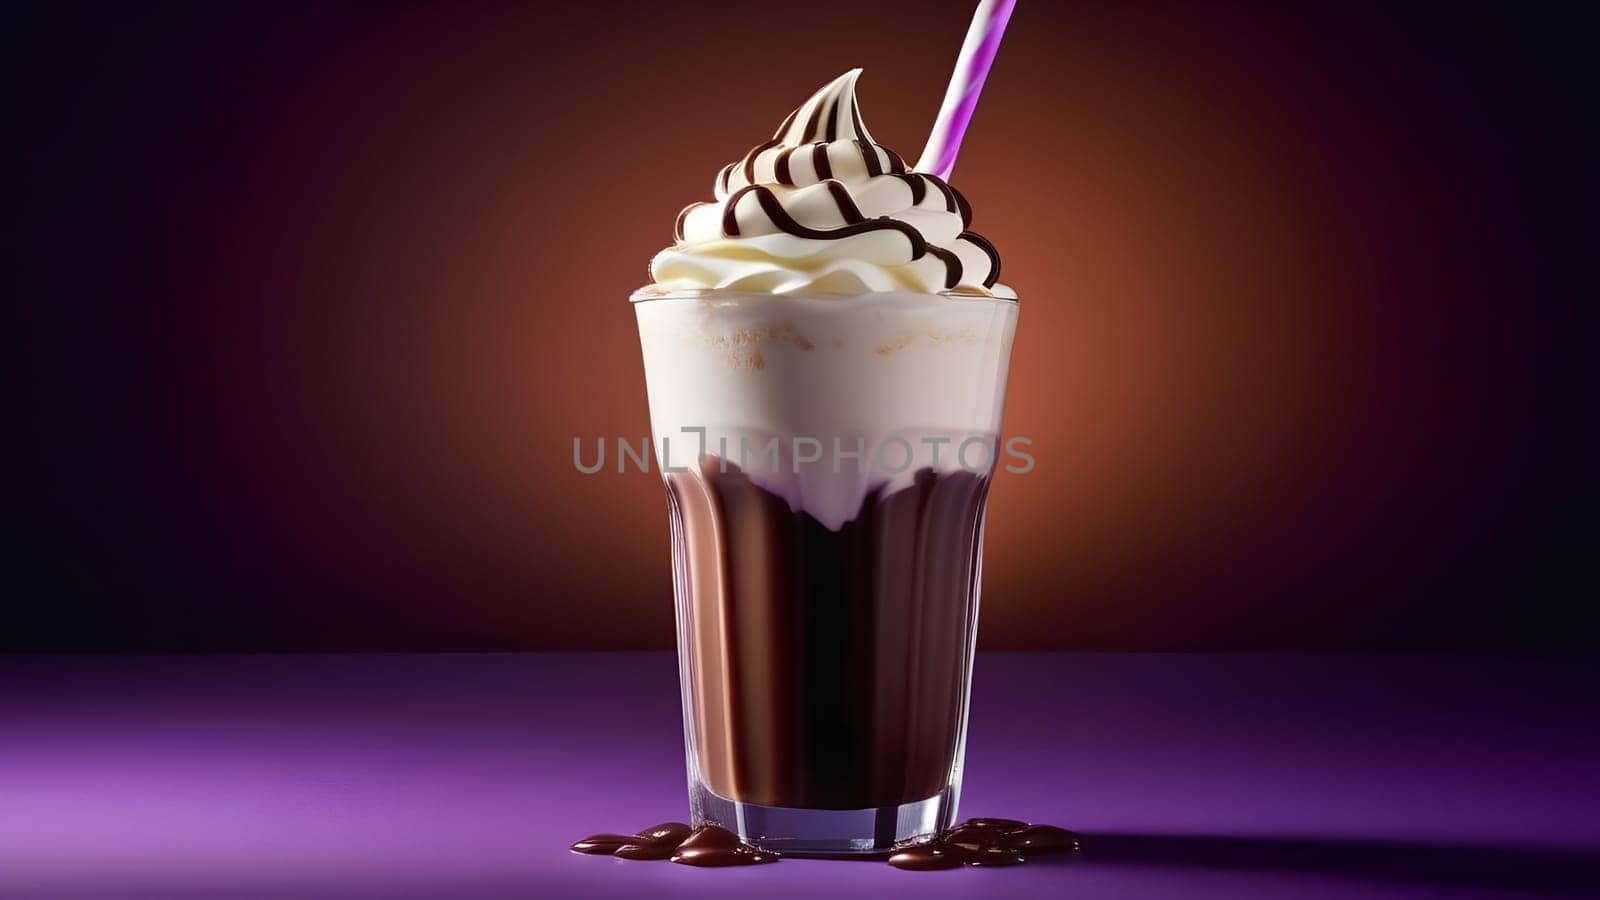 Milkshake with chocolate on a purple background by Севостьянов